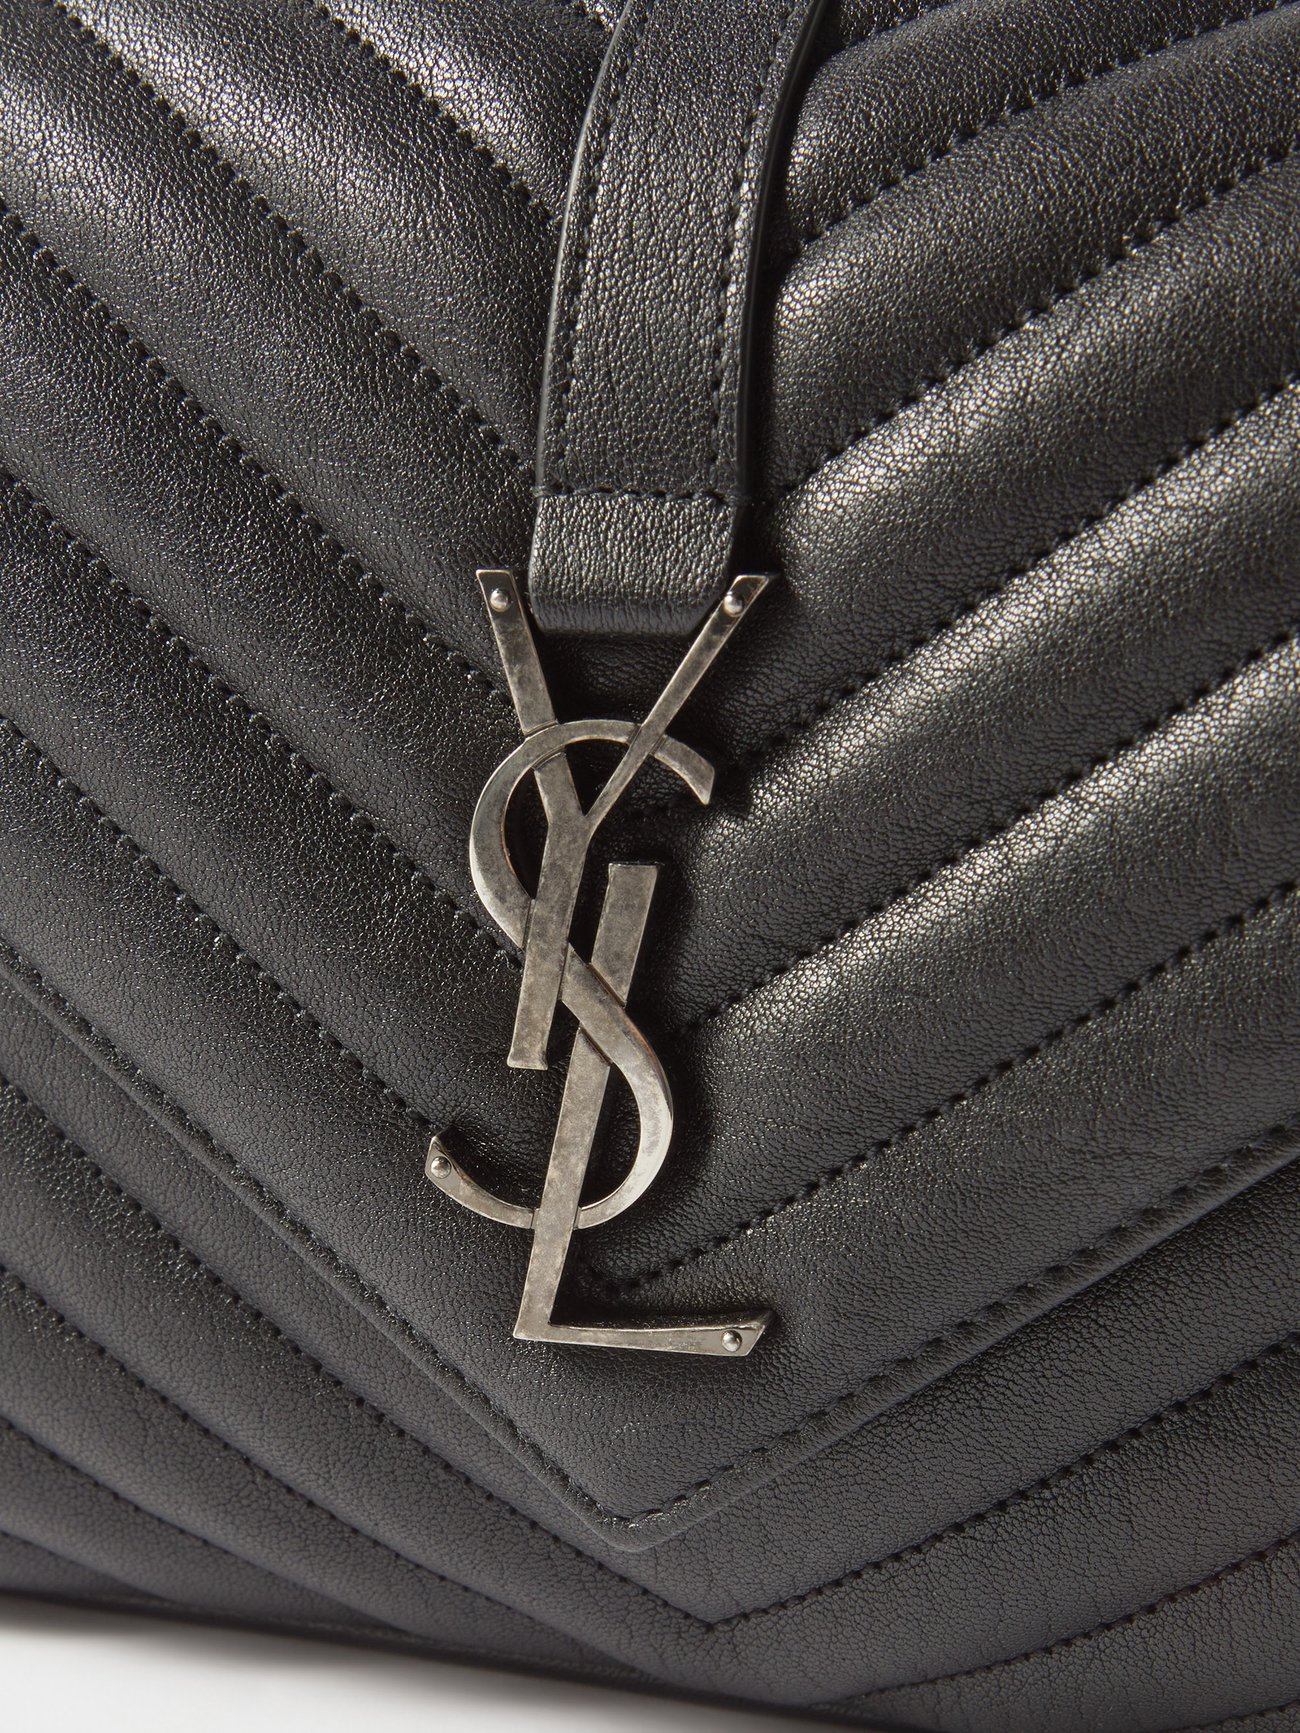 YSL Yves Saint Laurent medium college bag purse all black $2690